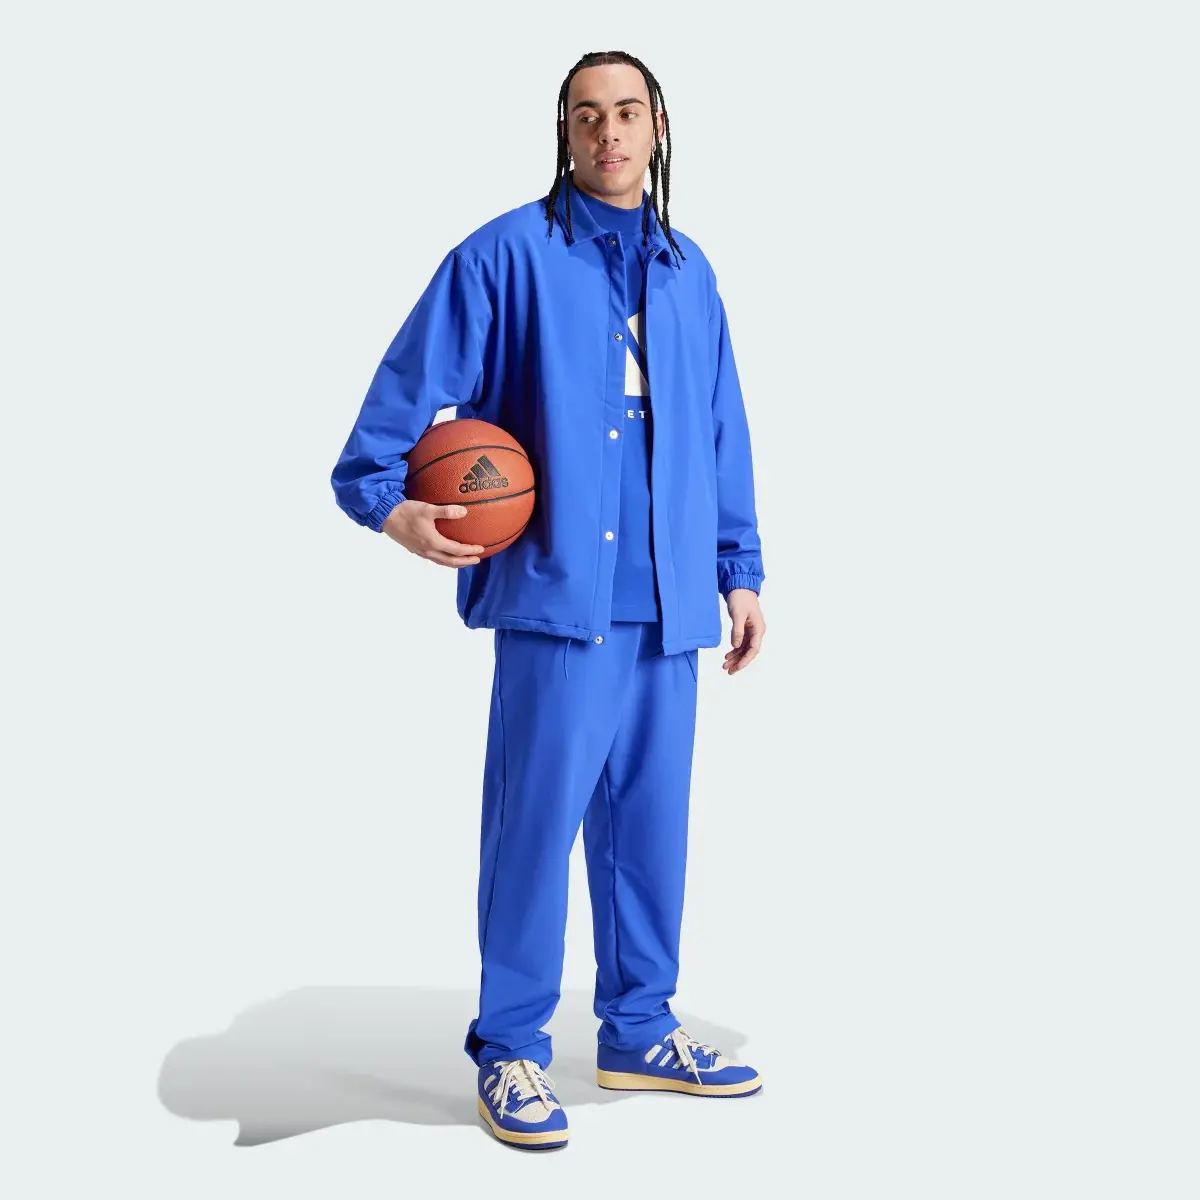 Adidas Basketball Snap Pants. 3